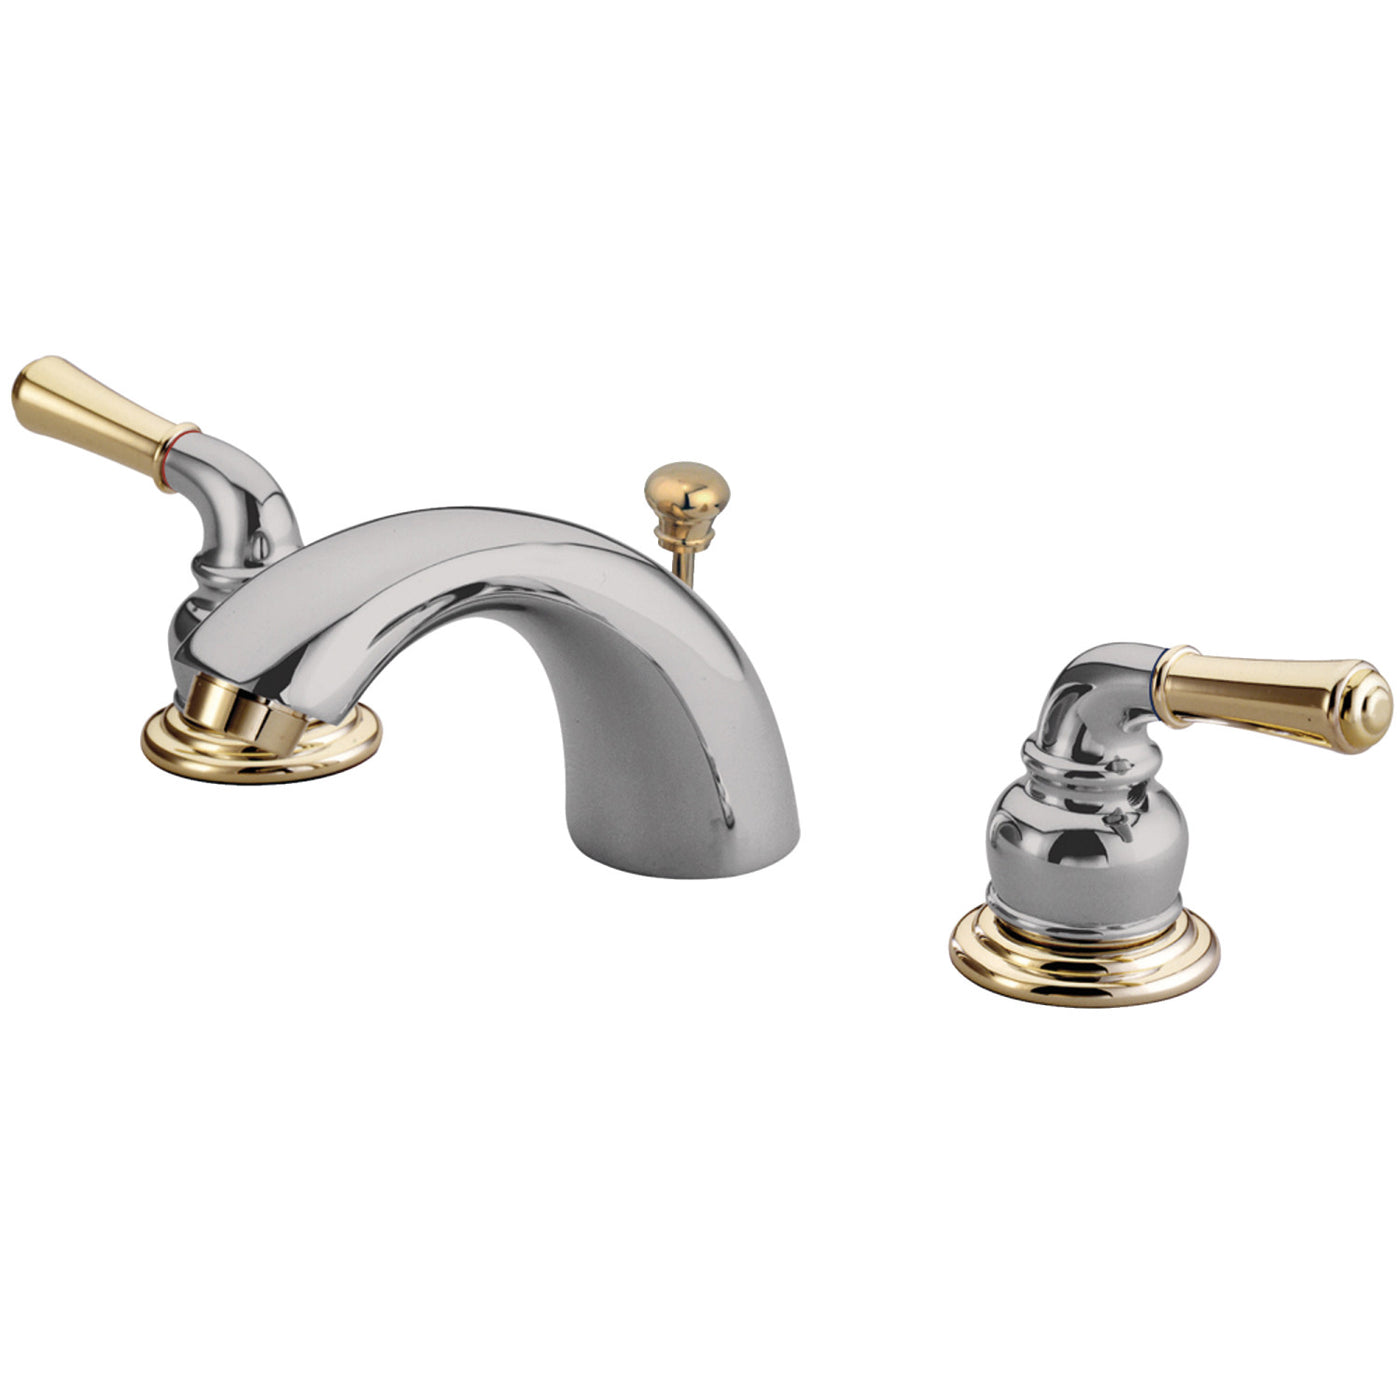 Elements of Design EB954 Mini-Widespread Bathroom Faucet, Polished Chrome/Polished Brass